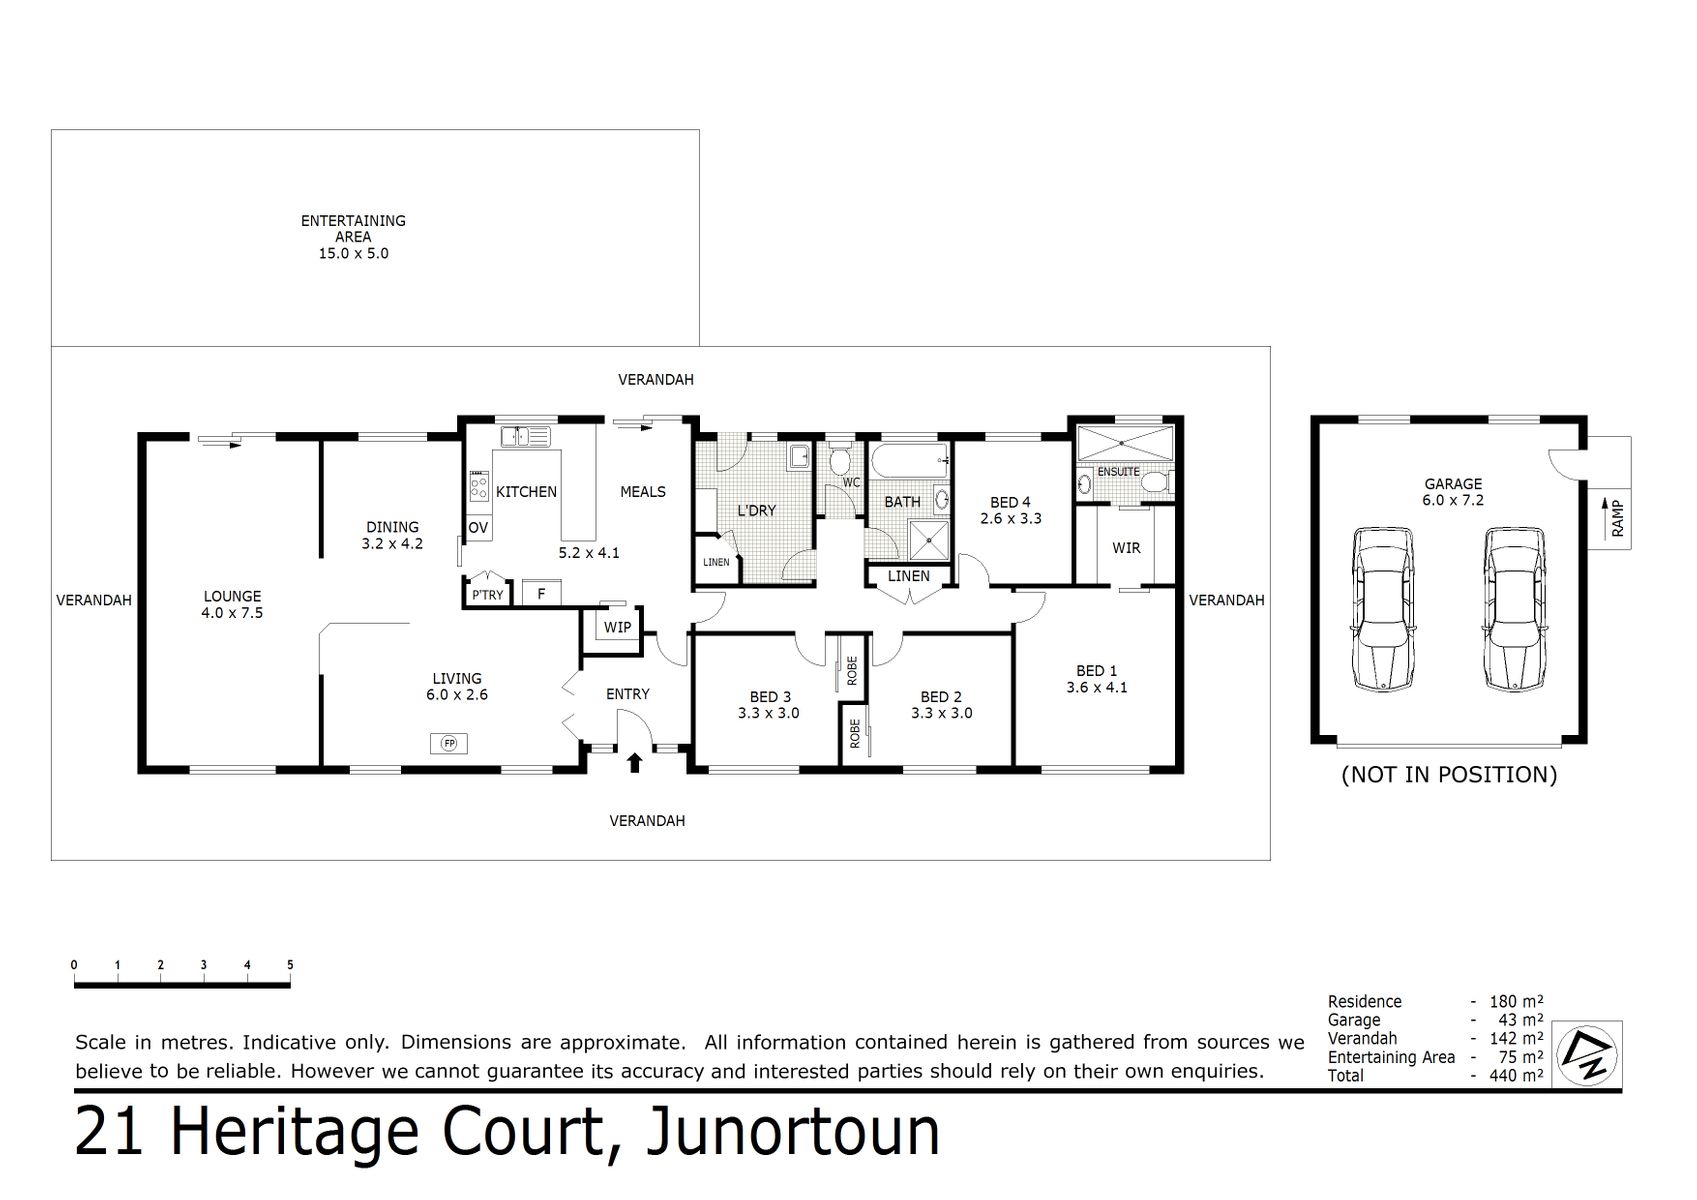 21 Heritage Court Junortoun (07 JAN 2020) 180sqm